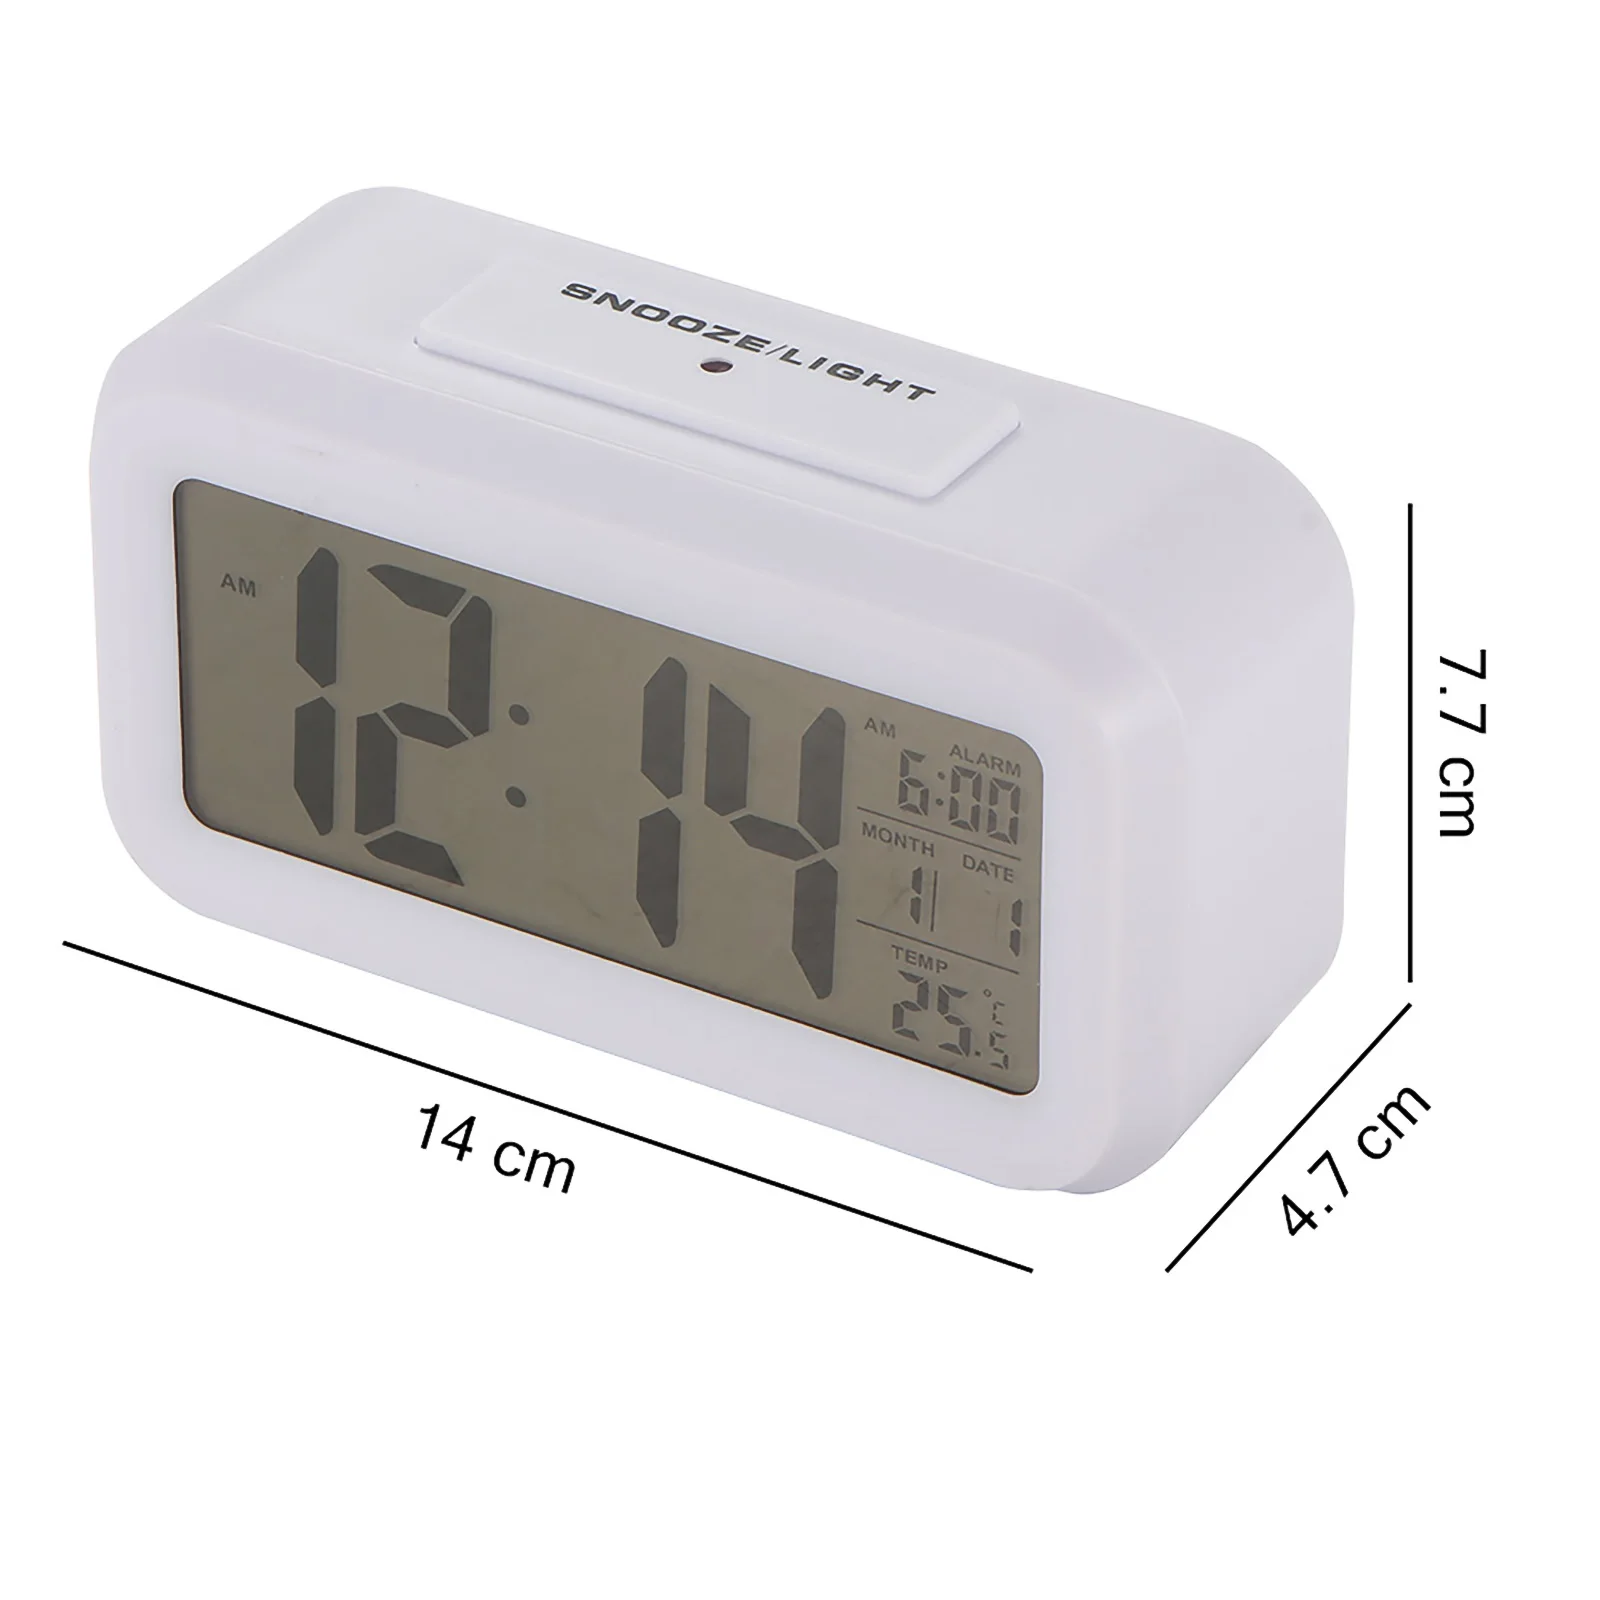 Digital Backlight Snooze Clock With Nightlight Multifunctional Desktop Alarm Clocks Large LCD Display Thermometer Home Decora images - 6